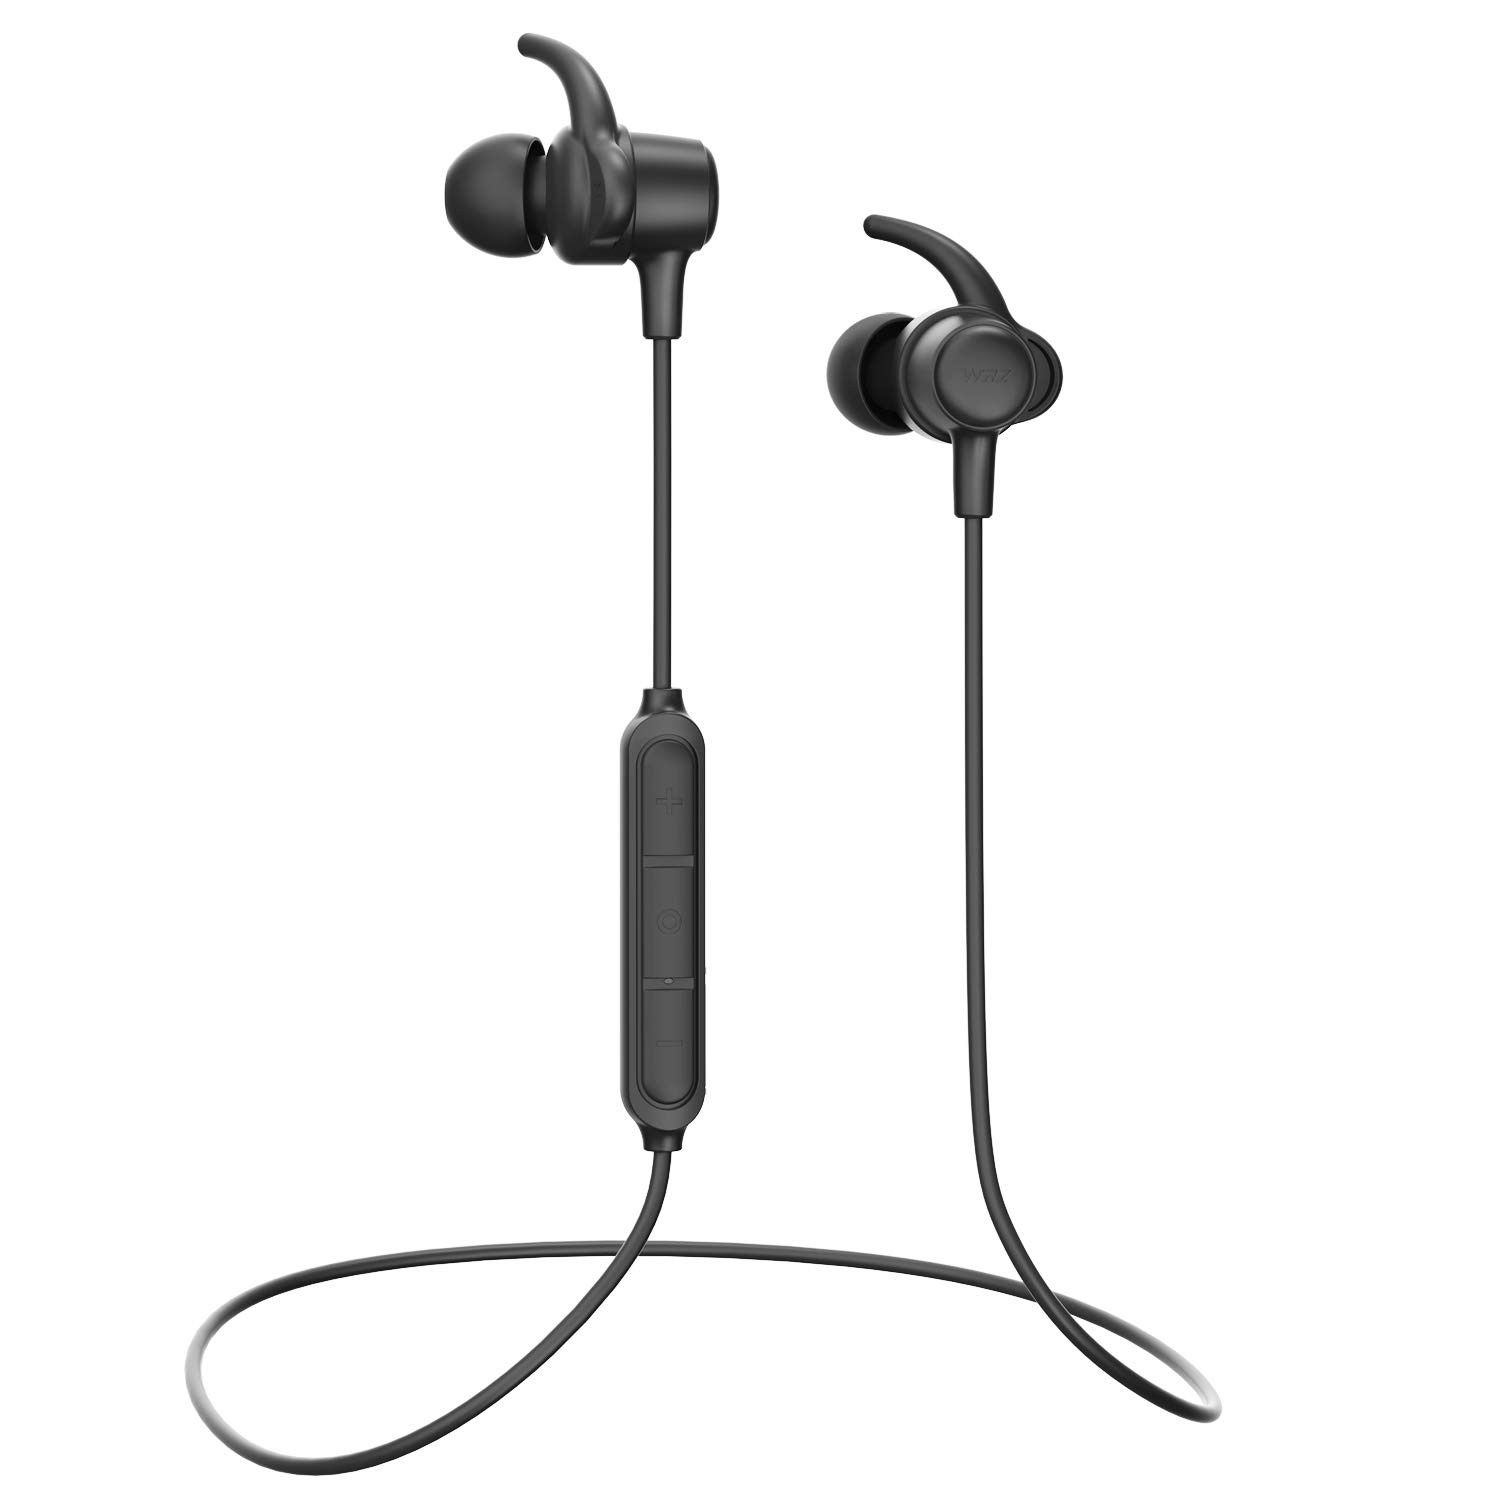 WRZ S8 Wireless Headphones Bluetooth 5.0 Earbuds Microphone IPX6 Sweatproof